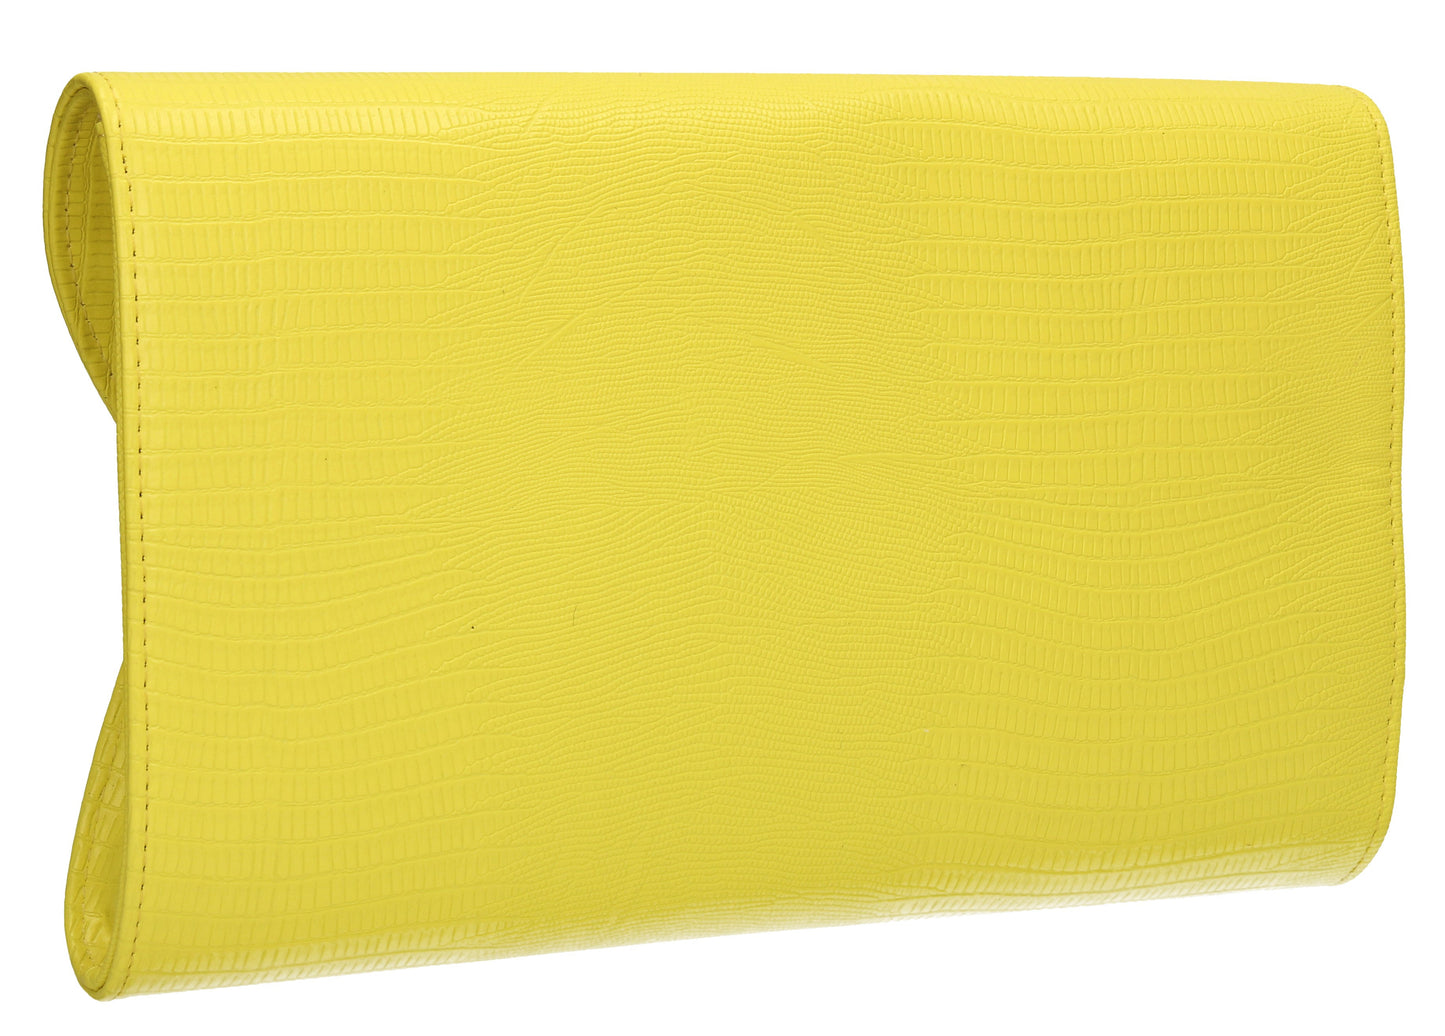 SWANKYSWANS Tania Clutch Bag Neon Yellow Cute Cheap Clutch Bag For Weddings School and Work